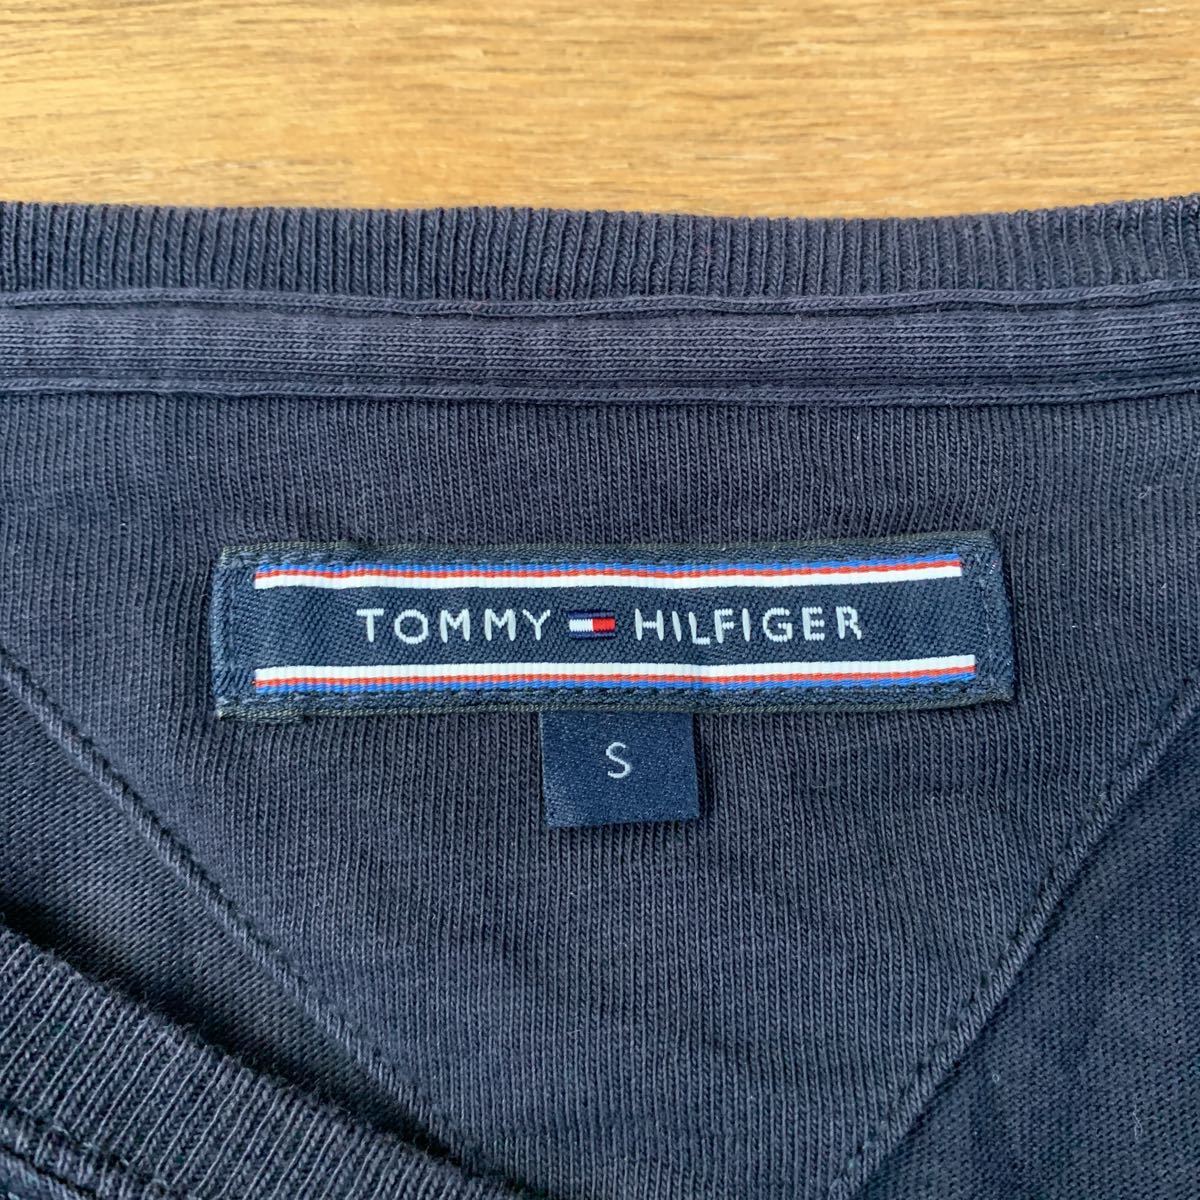 TOMMY HILFIGER 半袖 Tシャツ S ネイビー トミーヒルフィガー ワンポイントロゴ 古着卸 アメリカ仕入れ a406-5987_画像8